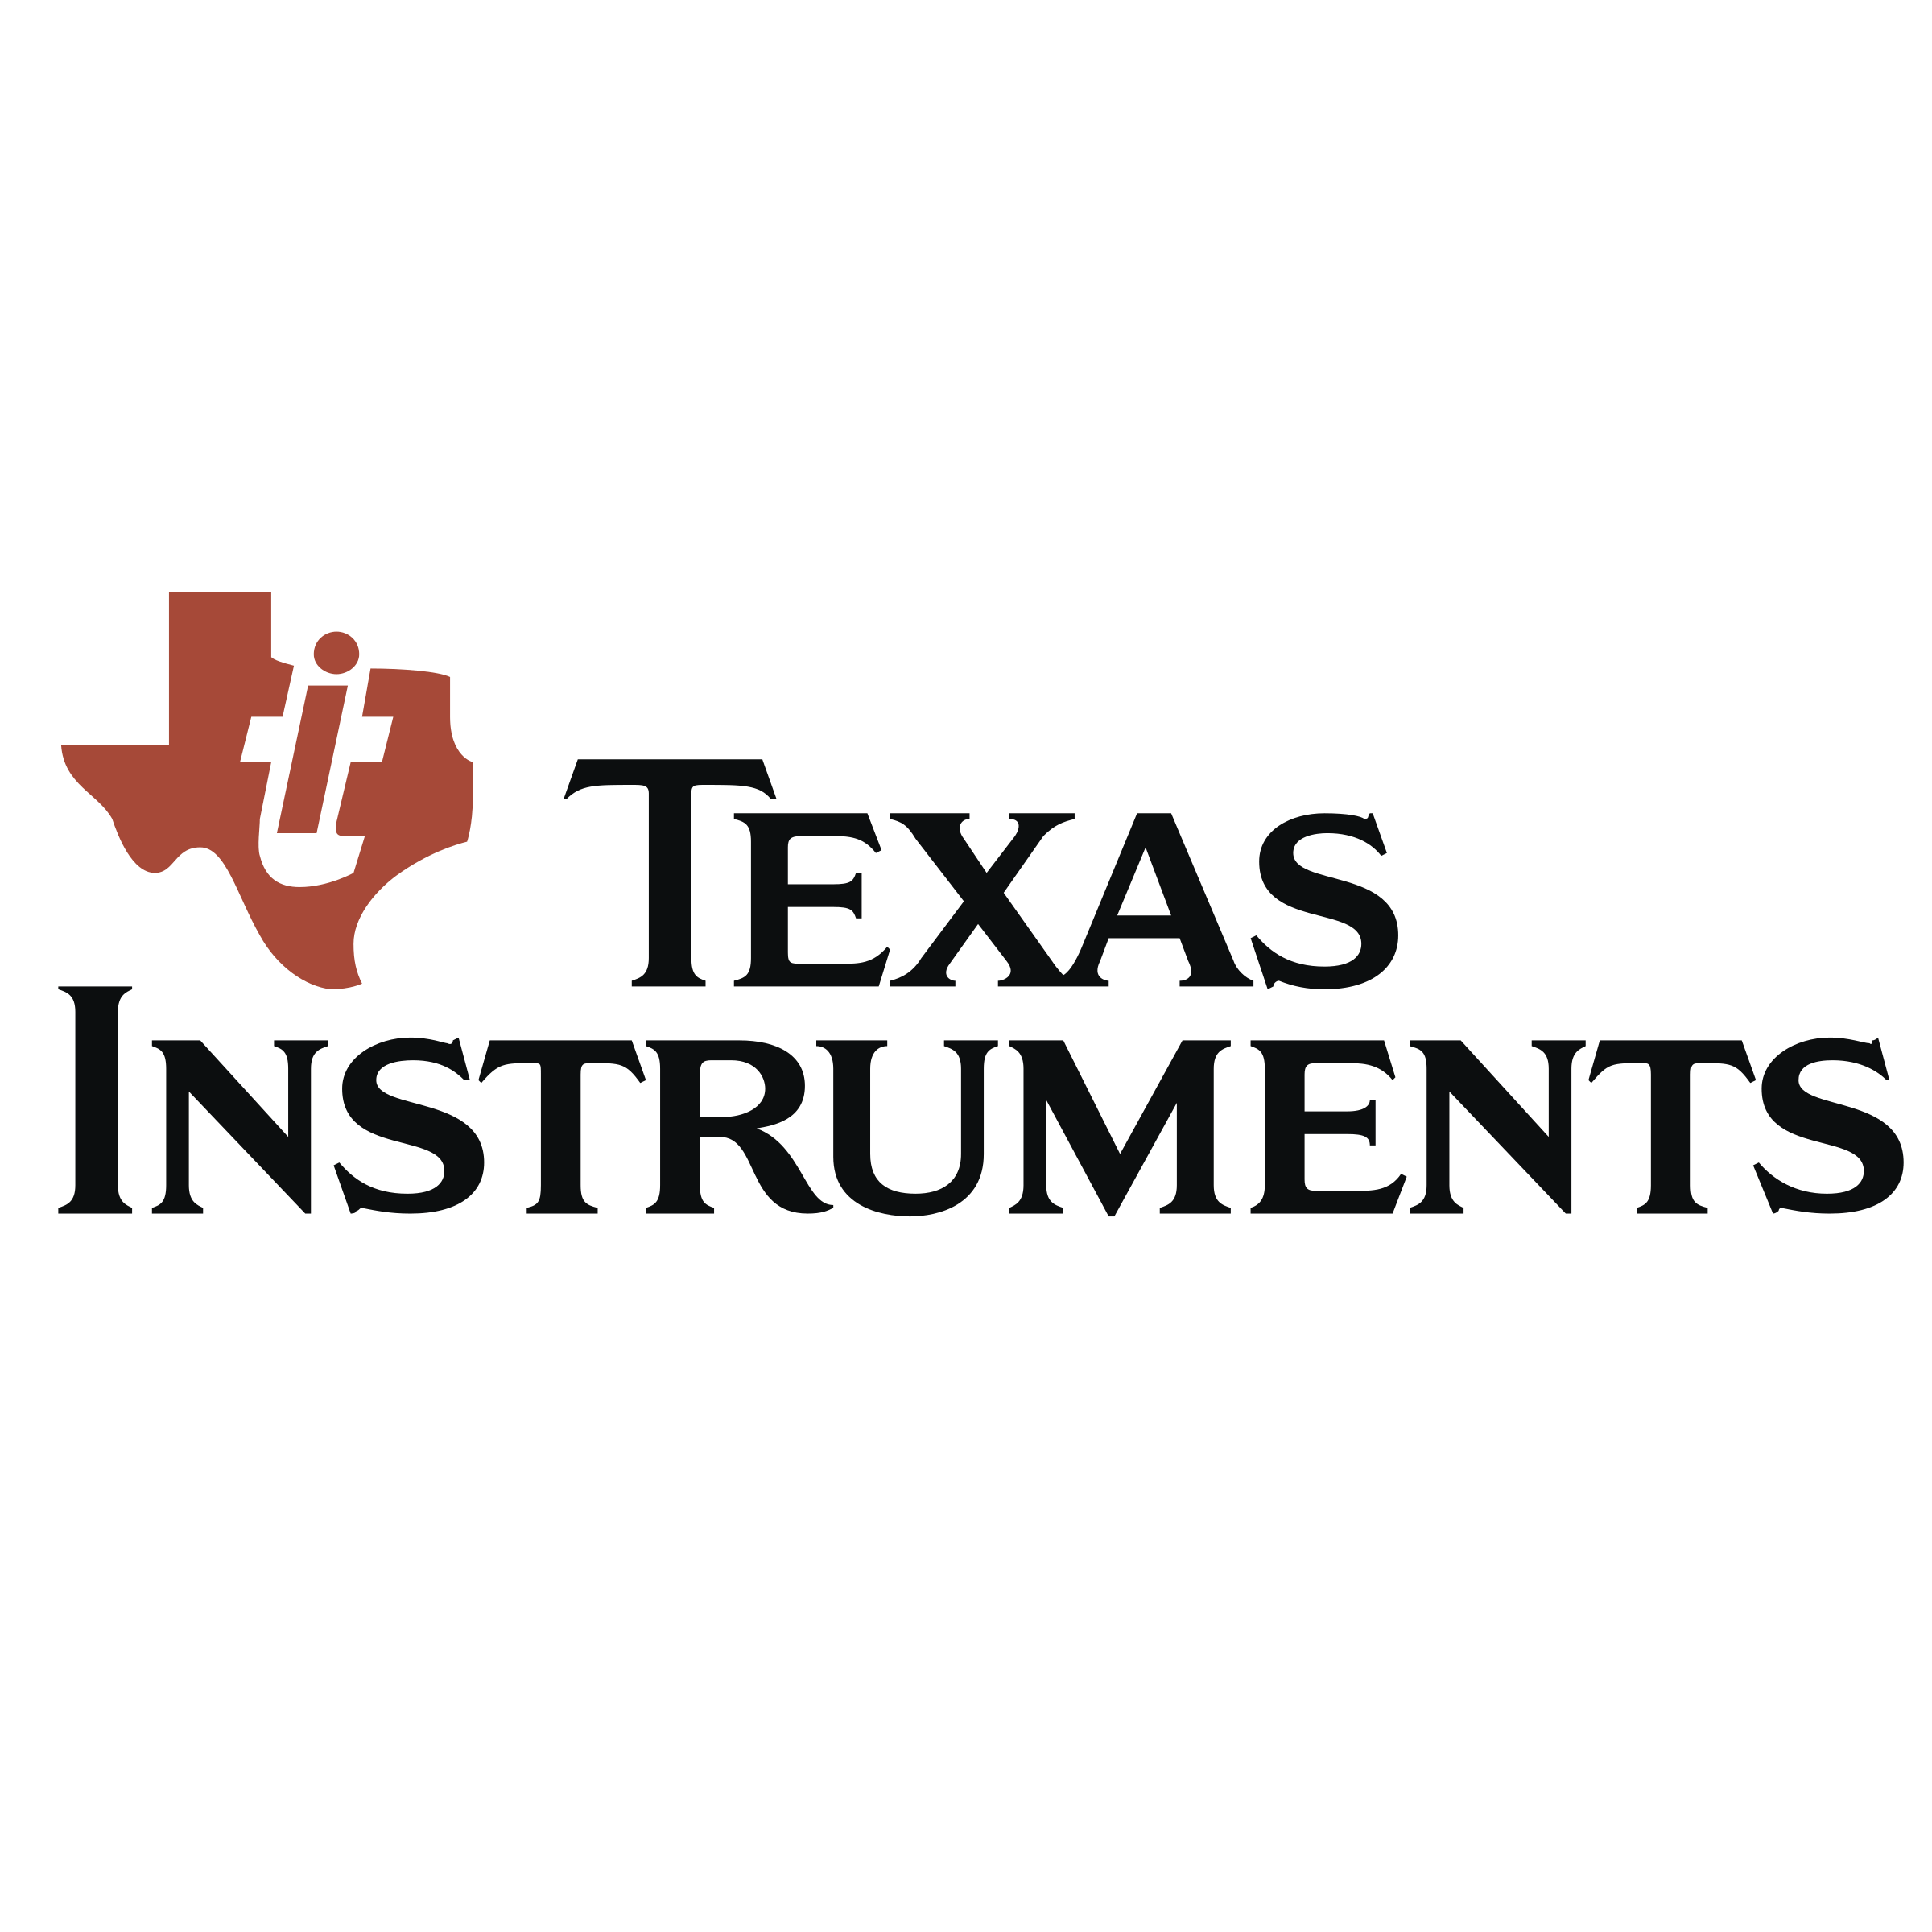 Texas Instruments Logo - Texas Instruments Logo PNG Transparent & SVG Vector - Freebie Supply